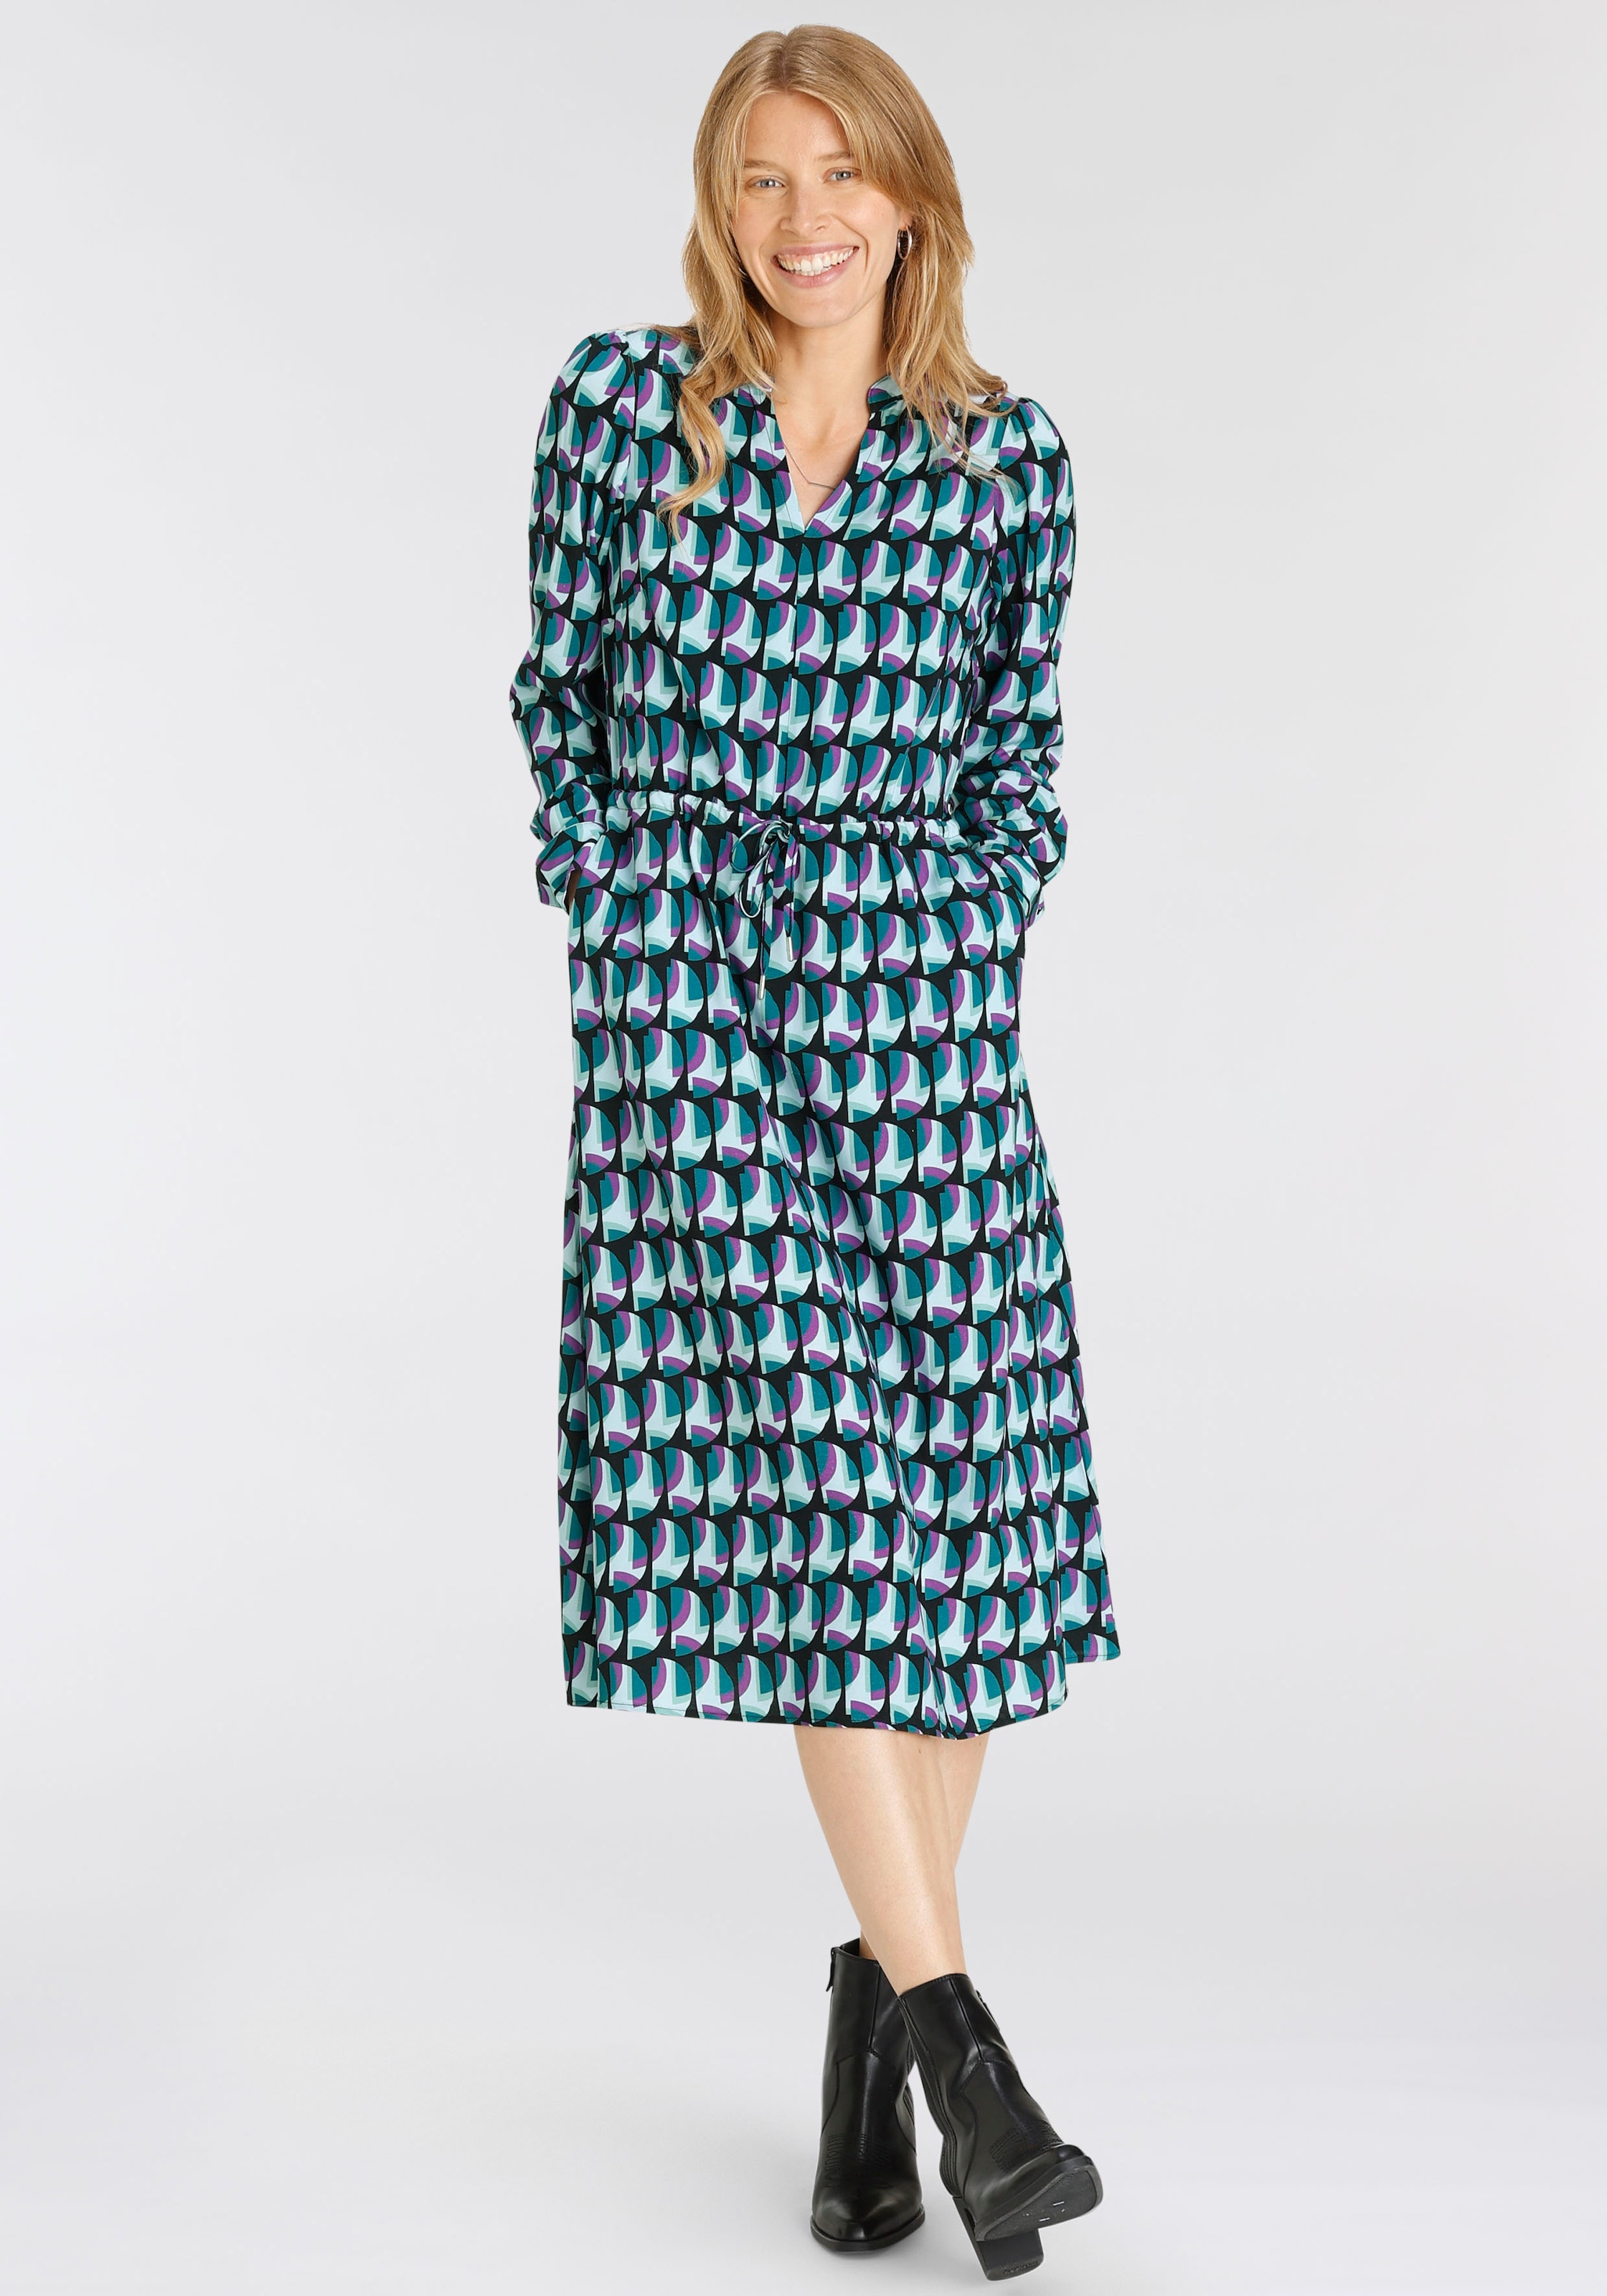 HECHTER PARIS Hemdblusenkleid, mit elegantem Allover-Print